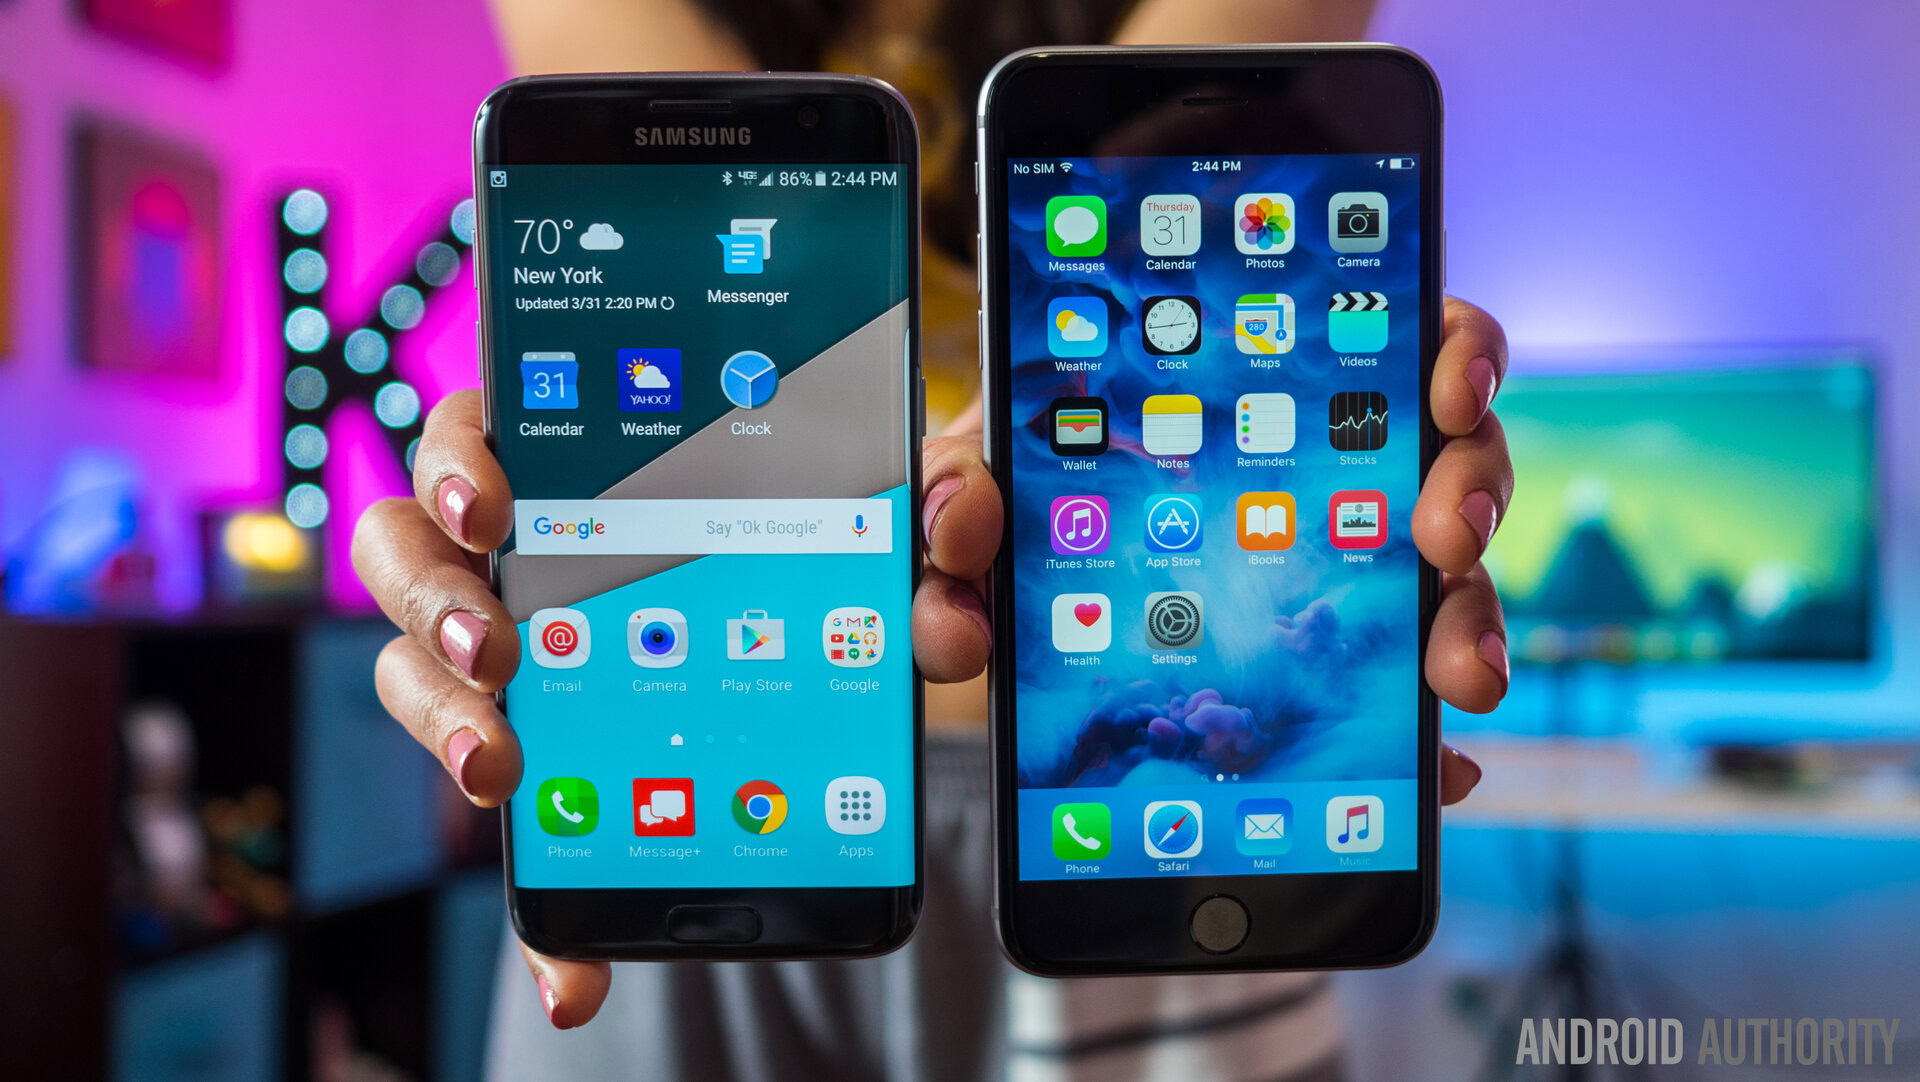 vingerafdruk bizon gips Samsung Galaxy S7 Edge vs iPhone 6s Plus - Android Authority